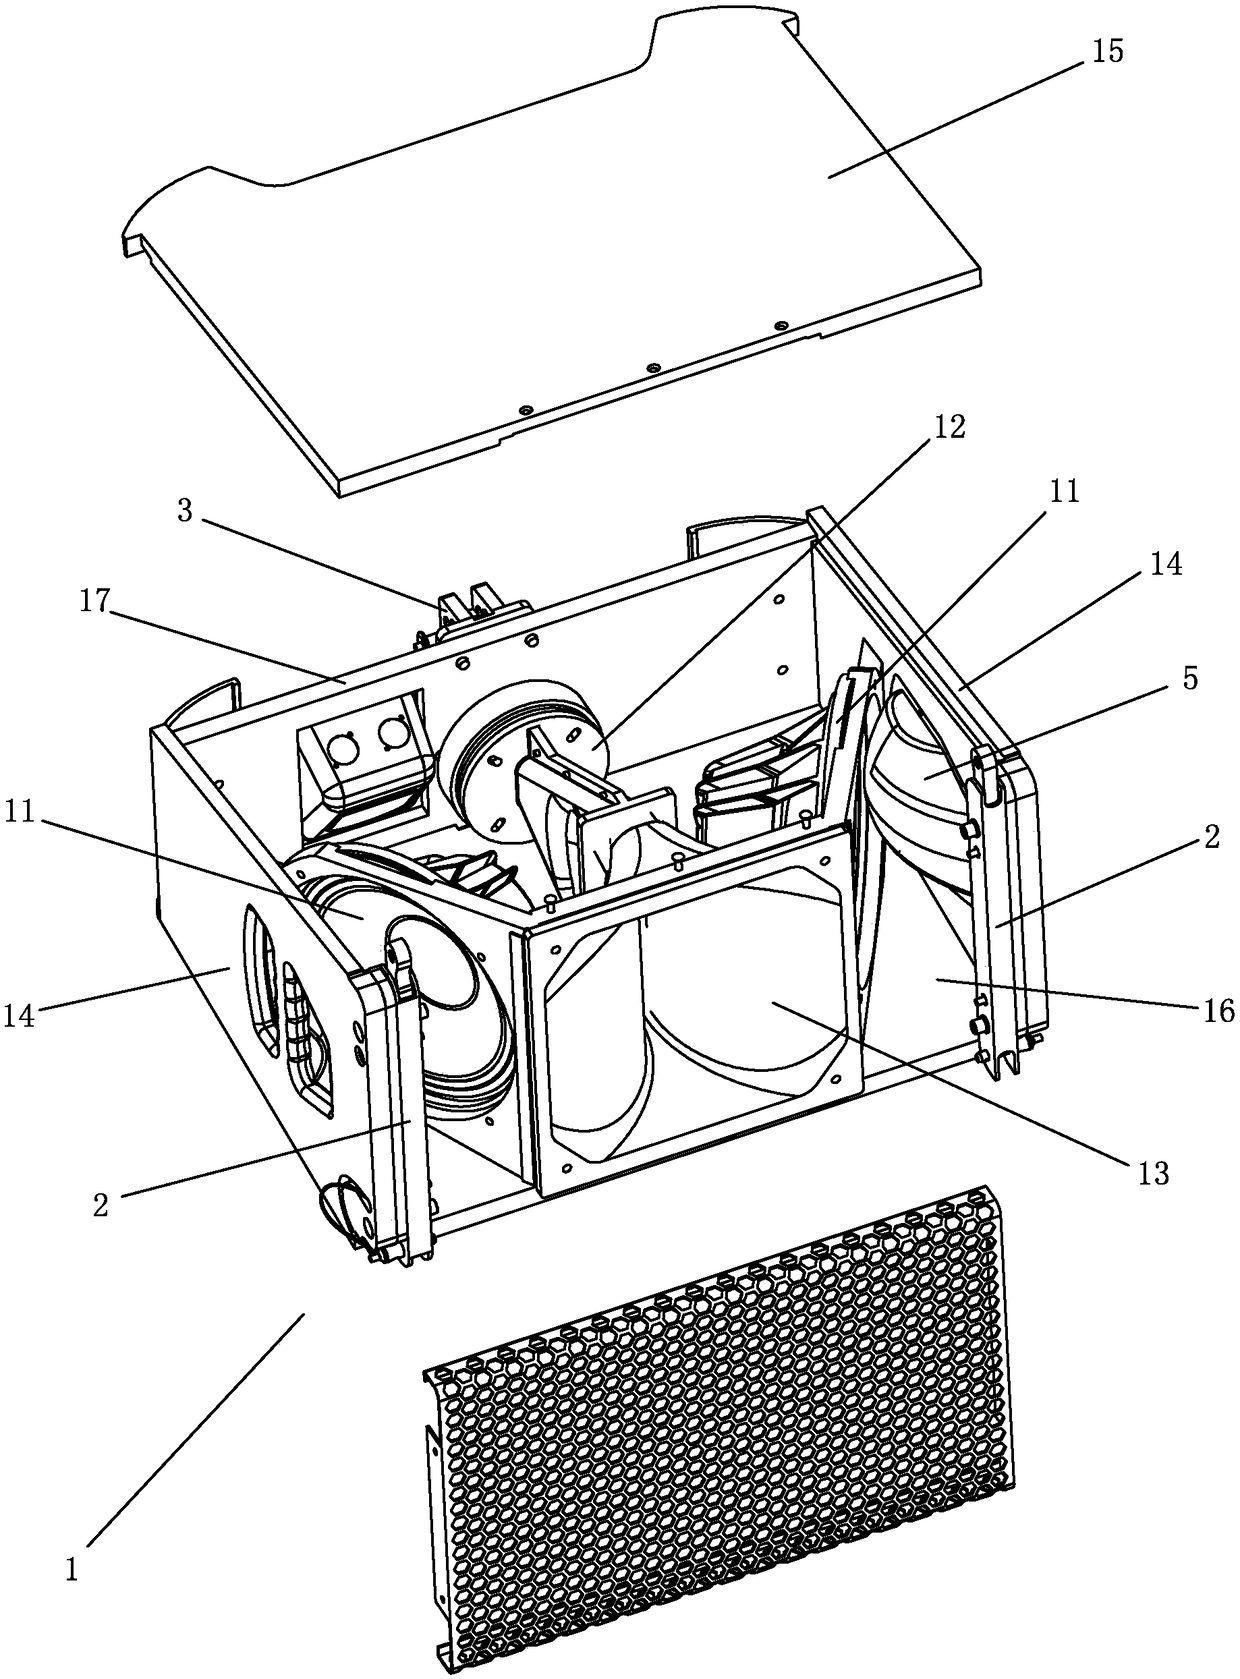 A kind of airflow compression speaker